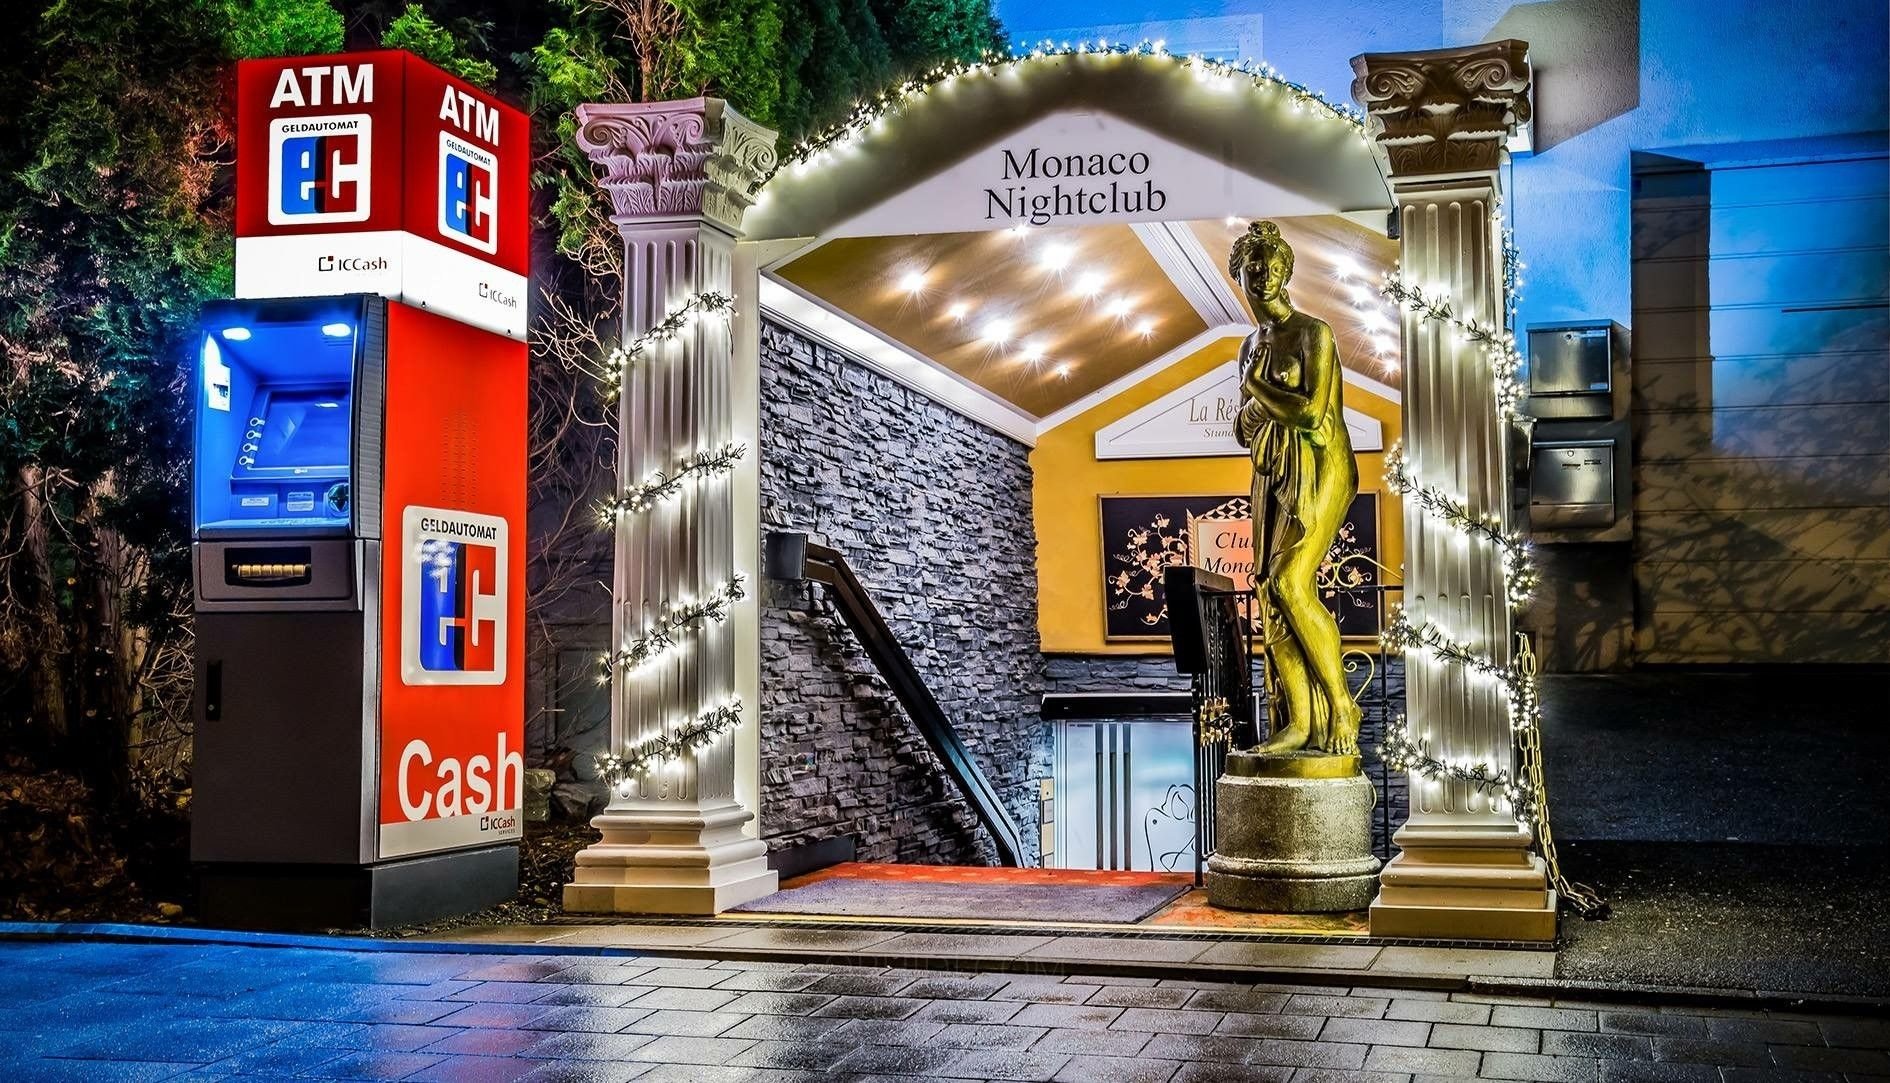 Best Adult Movie Theaters in Munich - place Monaco Nightclub